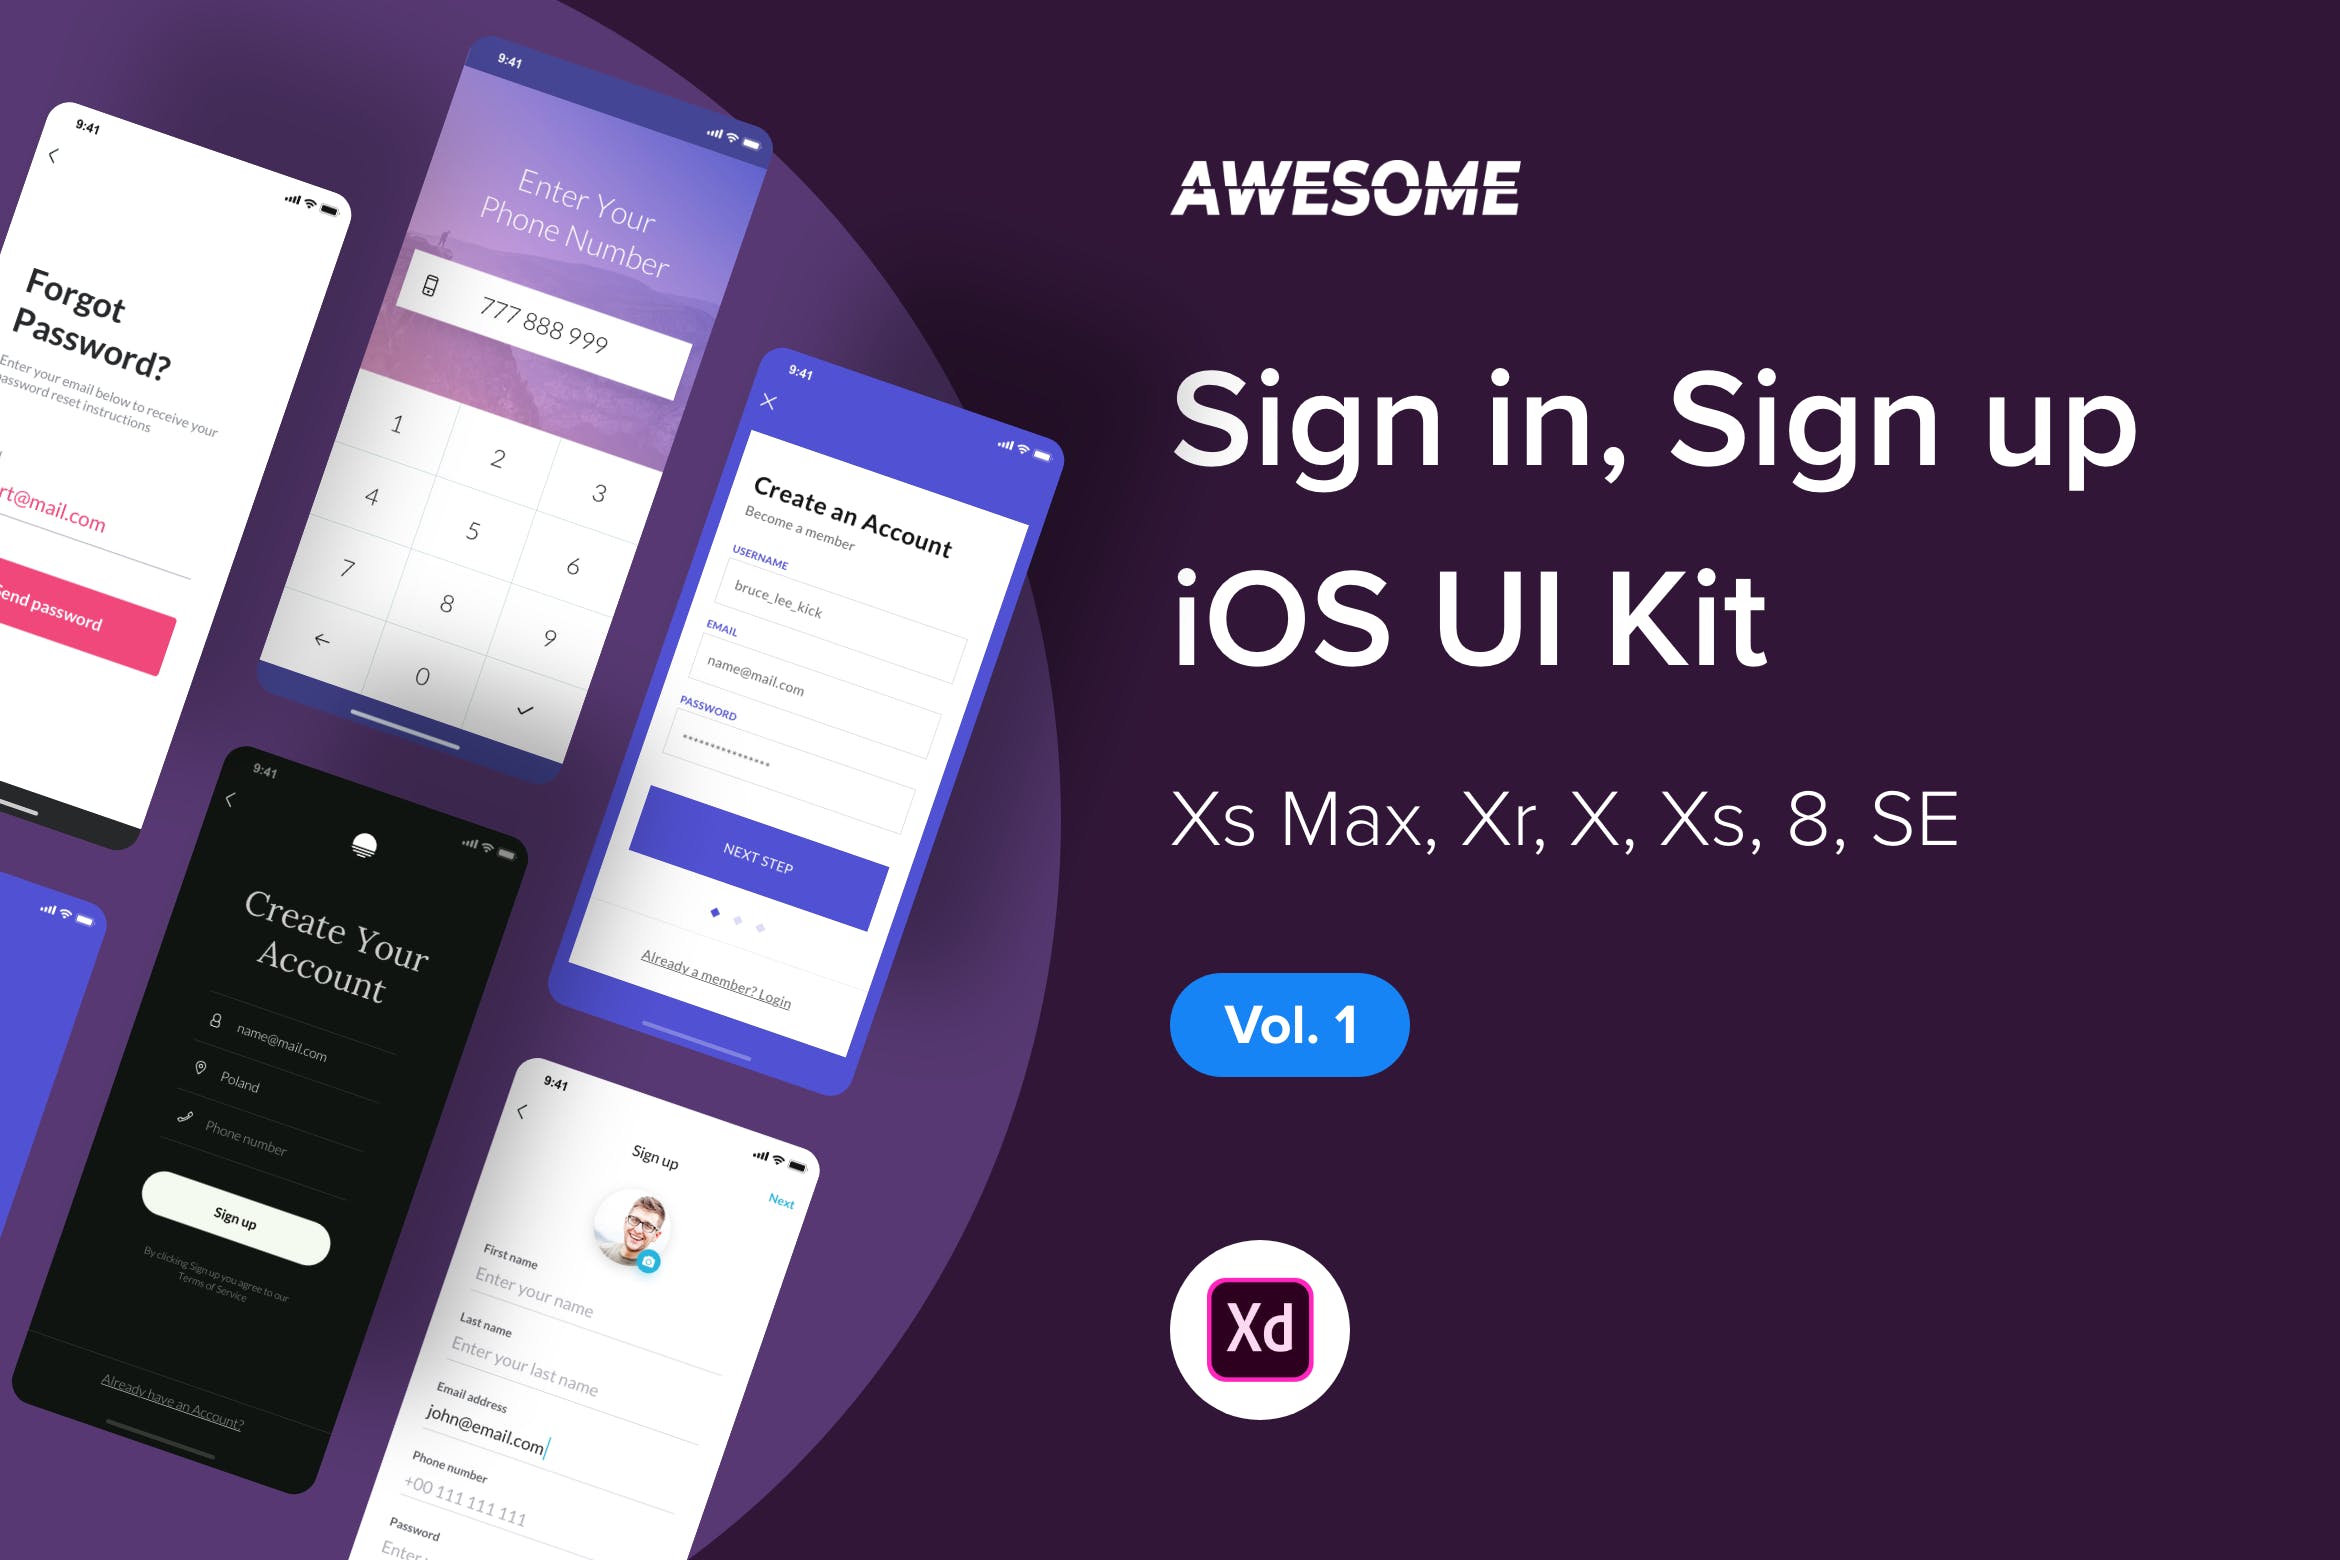 iOS平台APP应用注册登录界面设计XD模板v1 Awesome iOS UI Kit – Sign in, Sign up Vol. 1 (XD)插图